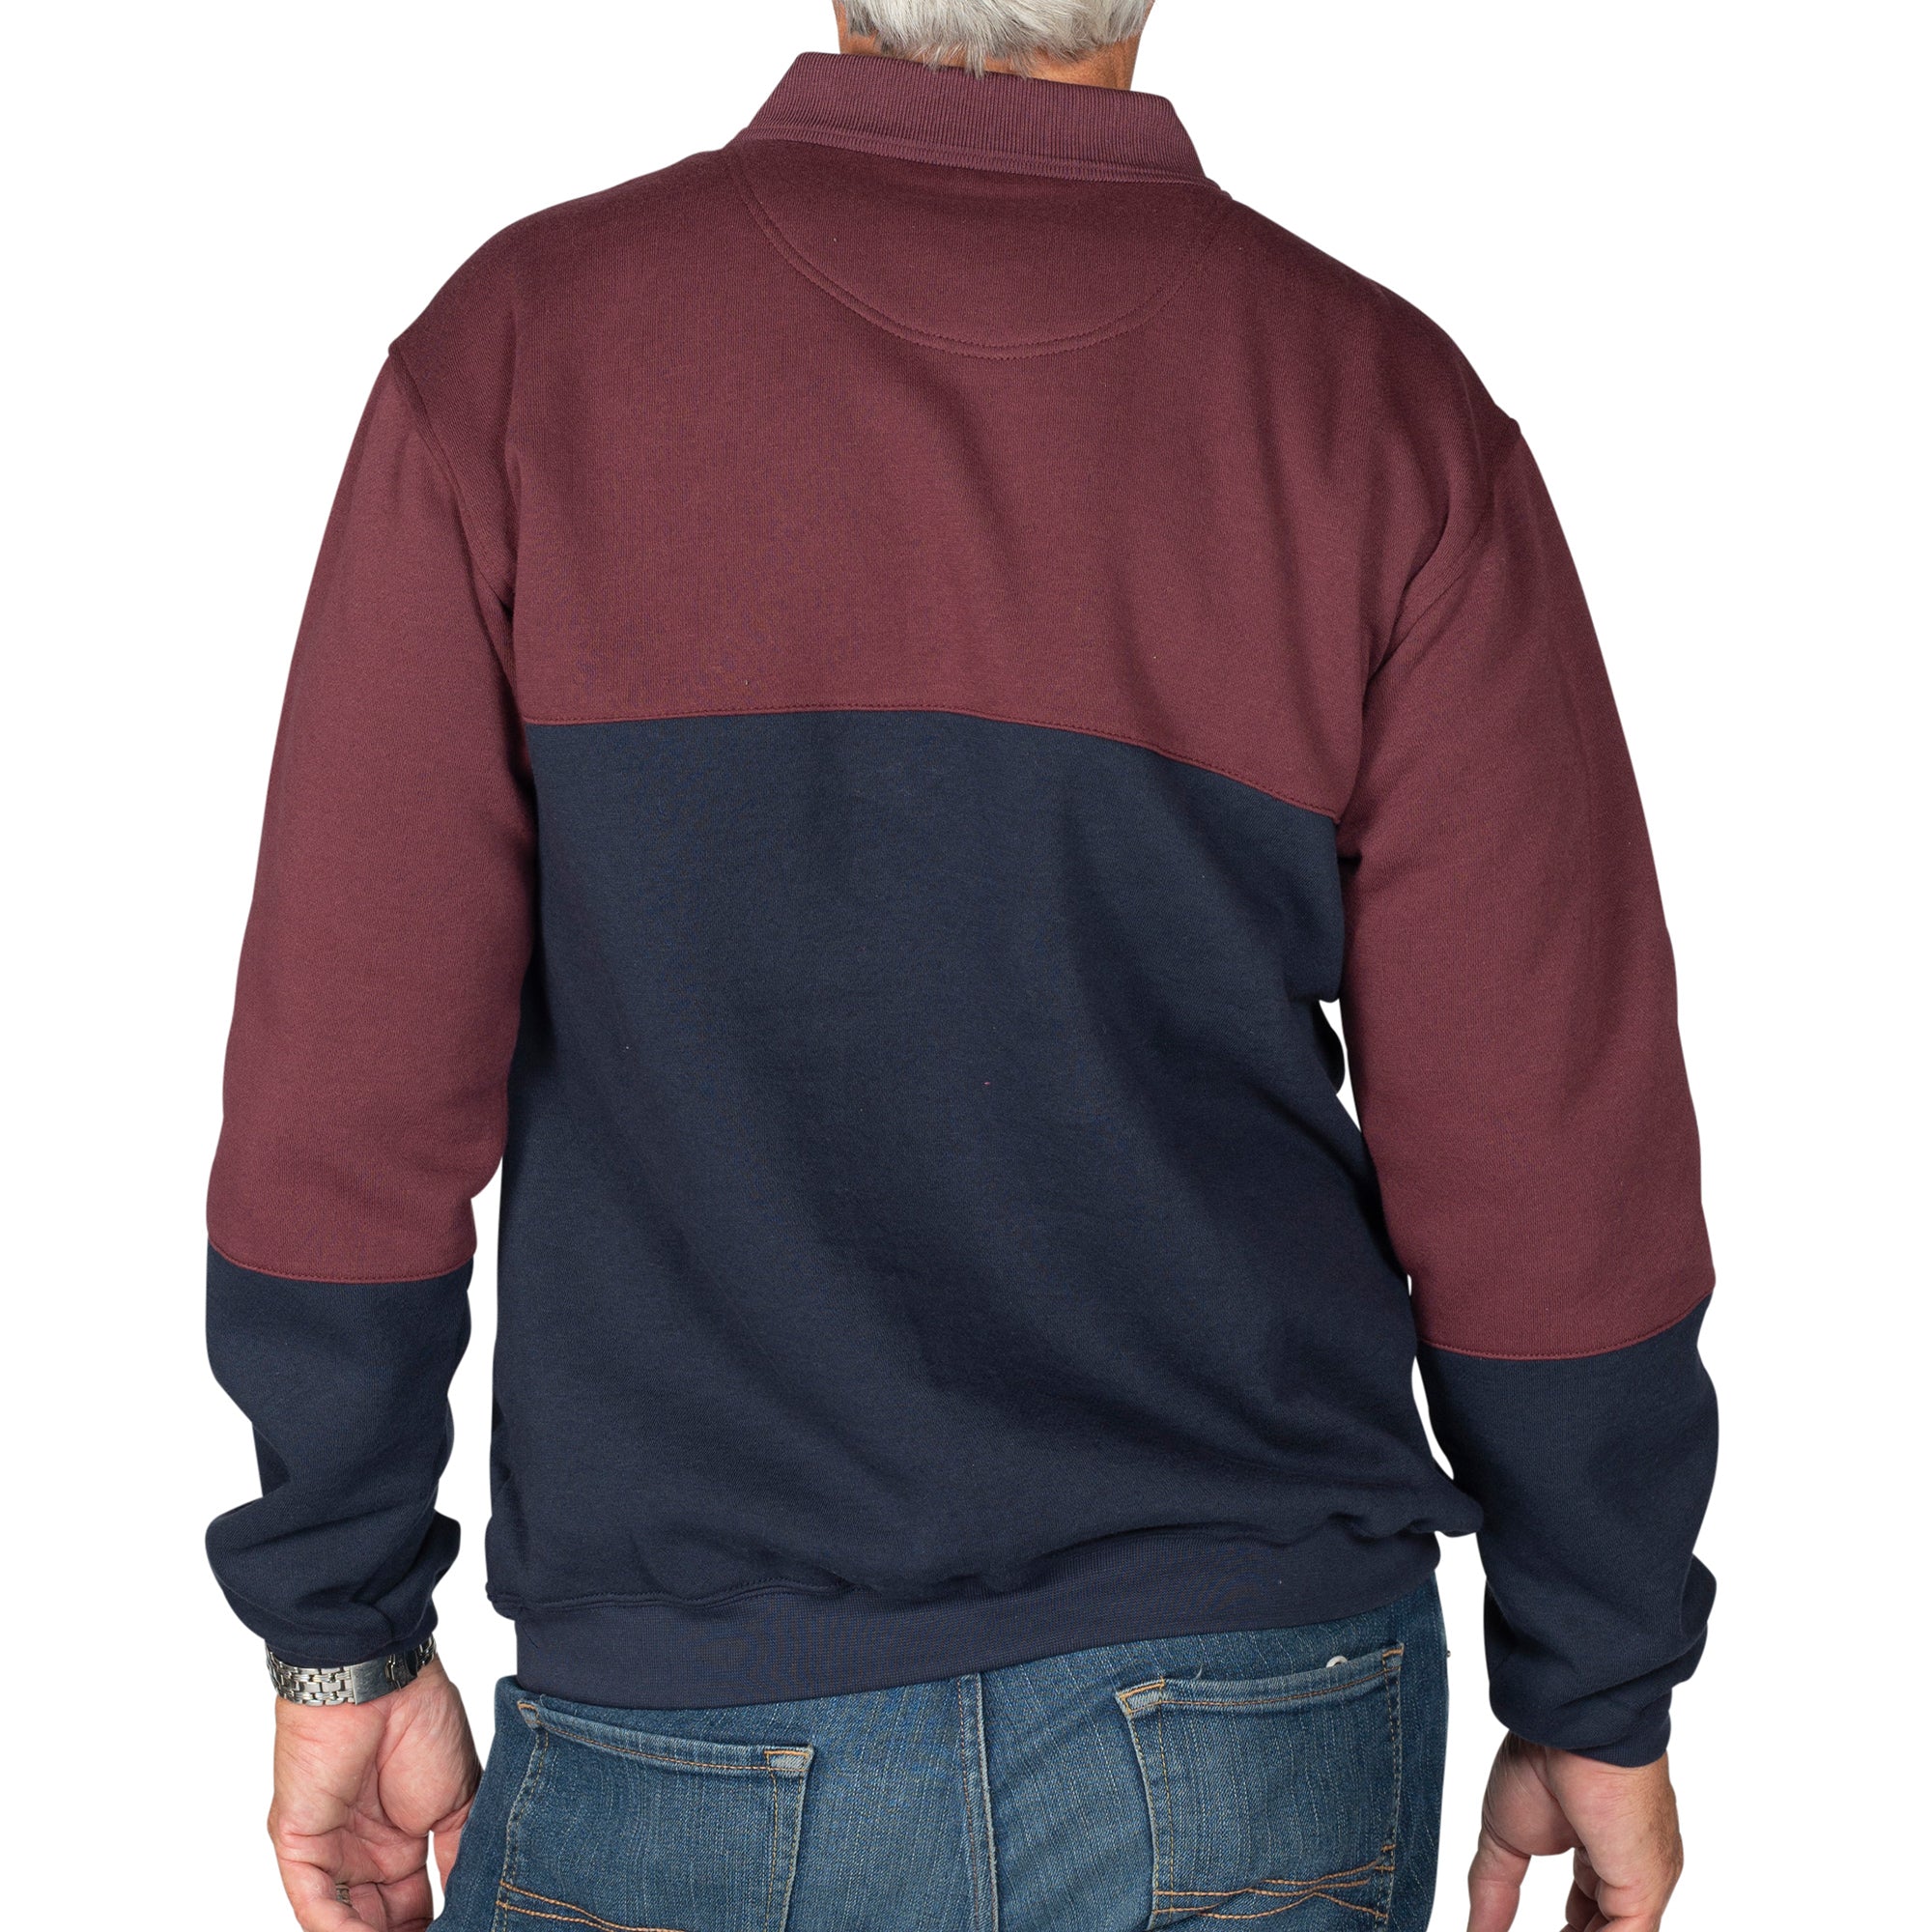 Classics by Palmland Horizontal Stripes Long Sleeve Banded Bottom Shirt 6198-210BT Burgundy Big and Tall